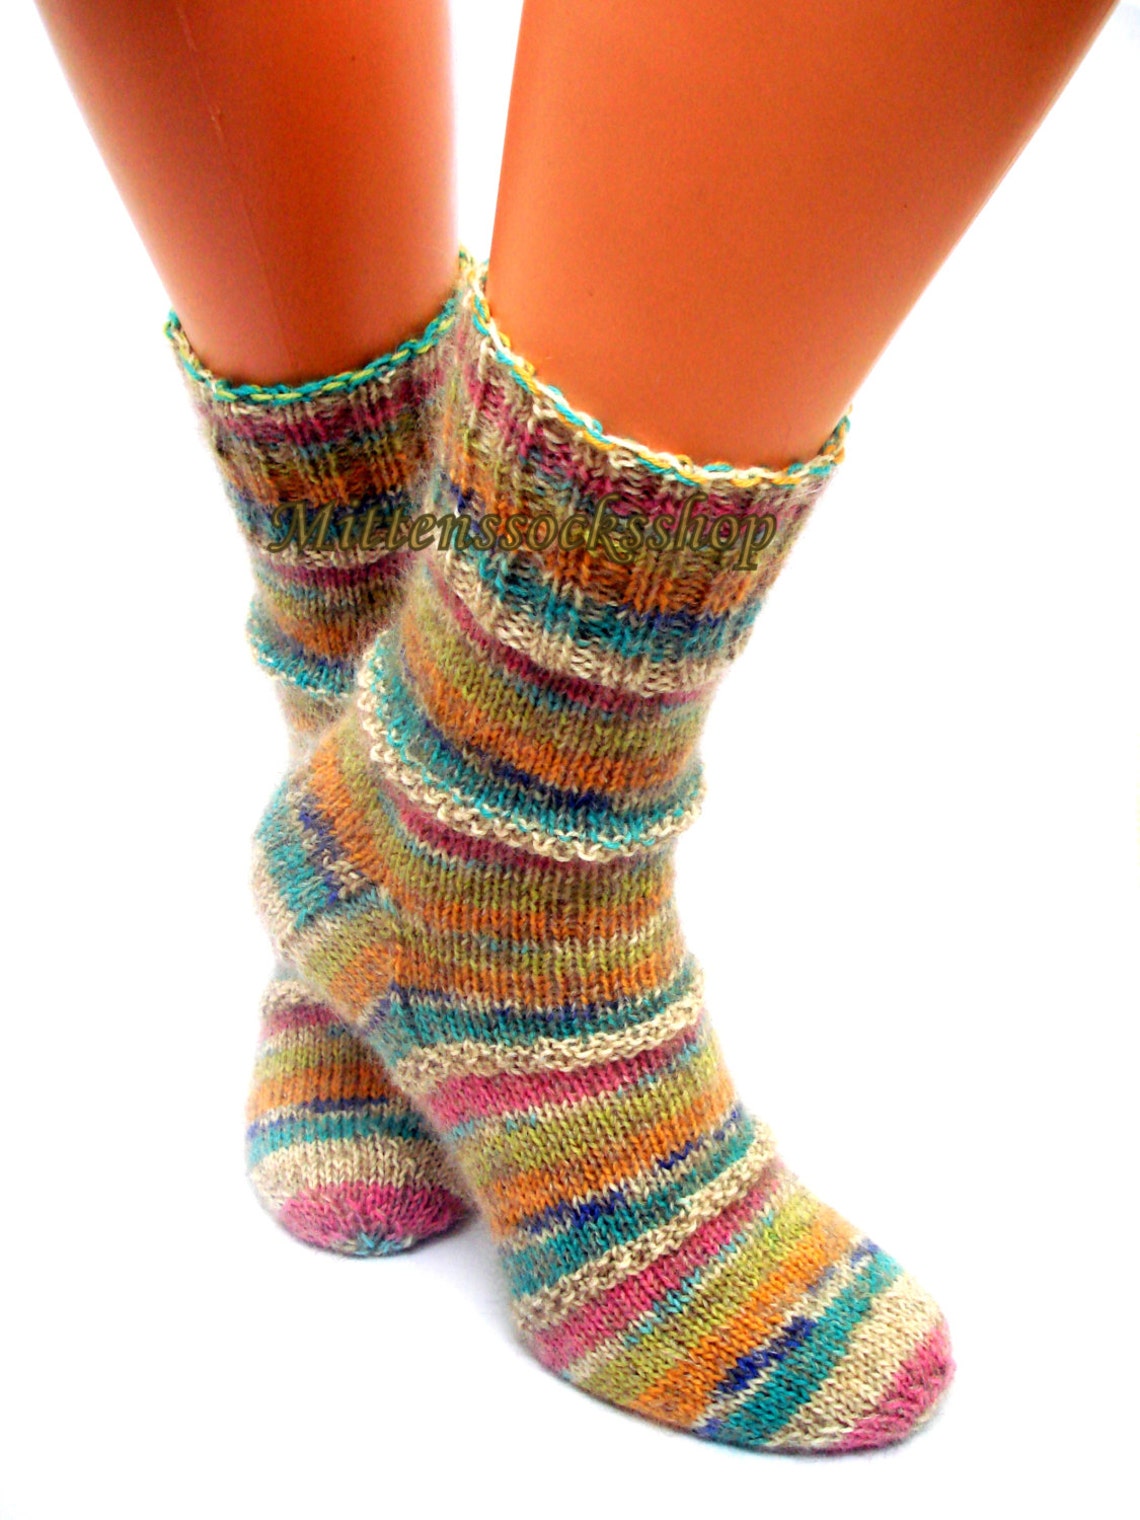 Hand Knitted Yellow Blue Pink Socks Warm Socks From Sock Yarn | Etsy